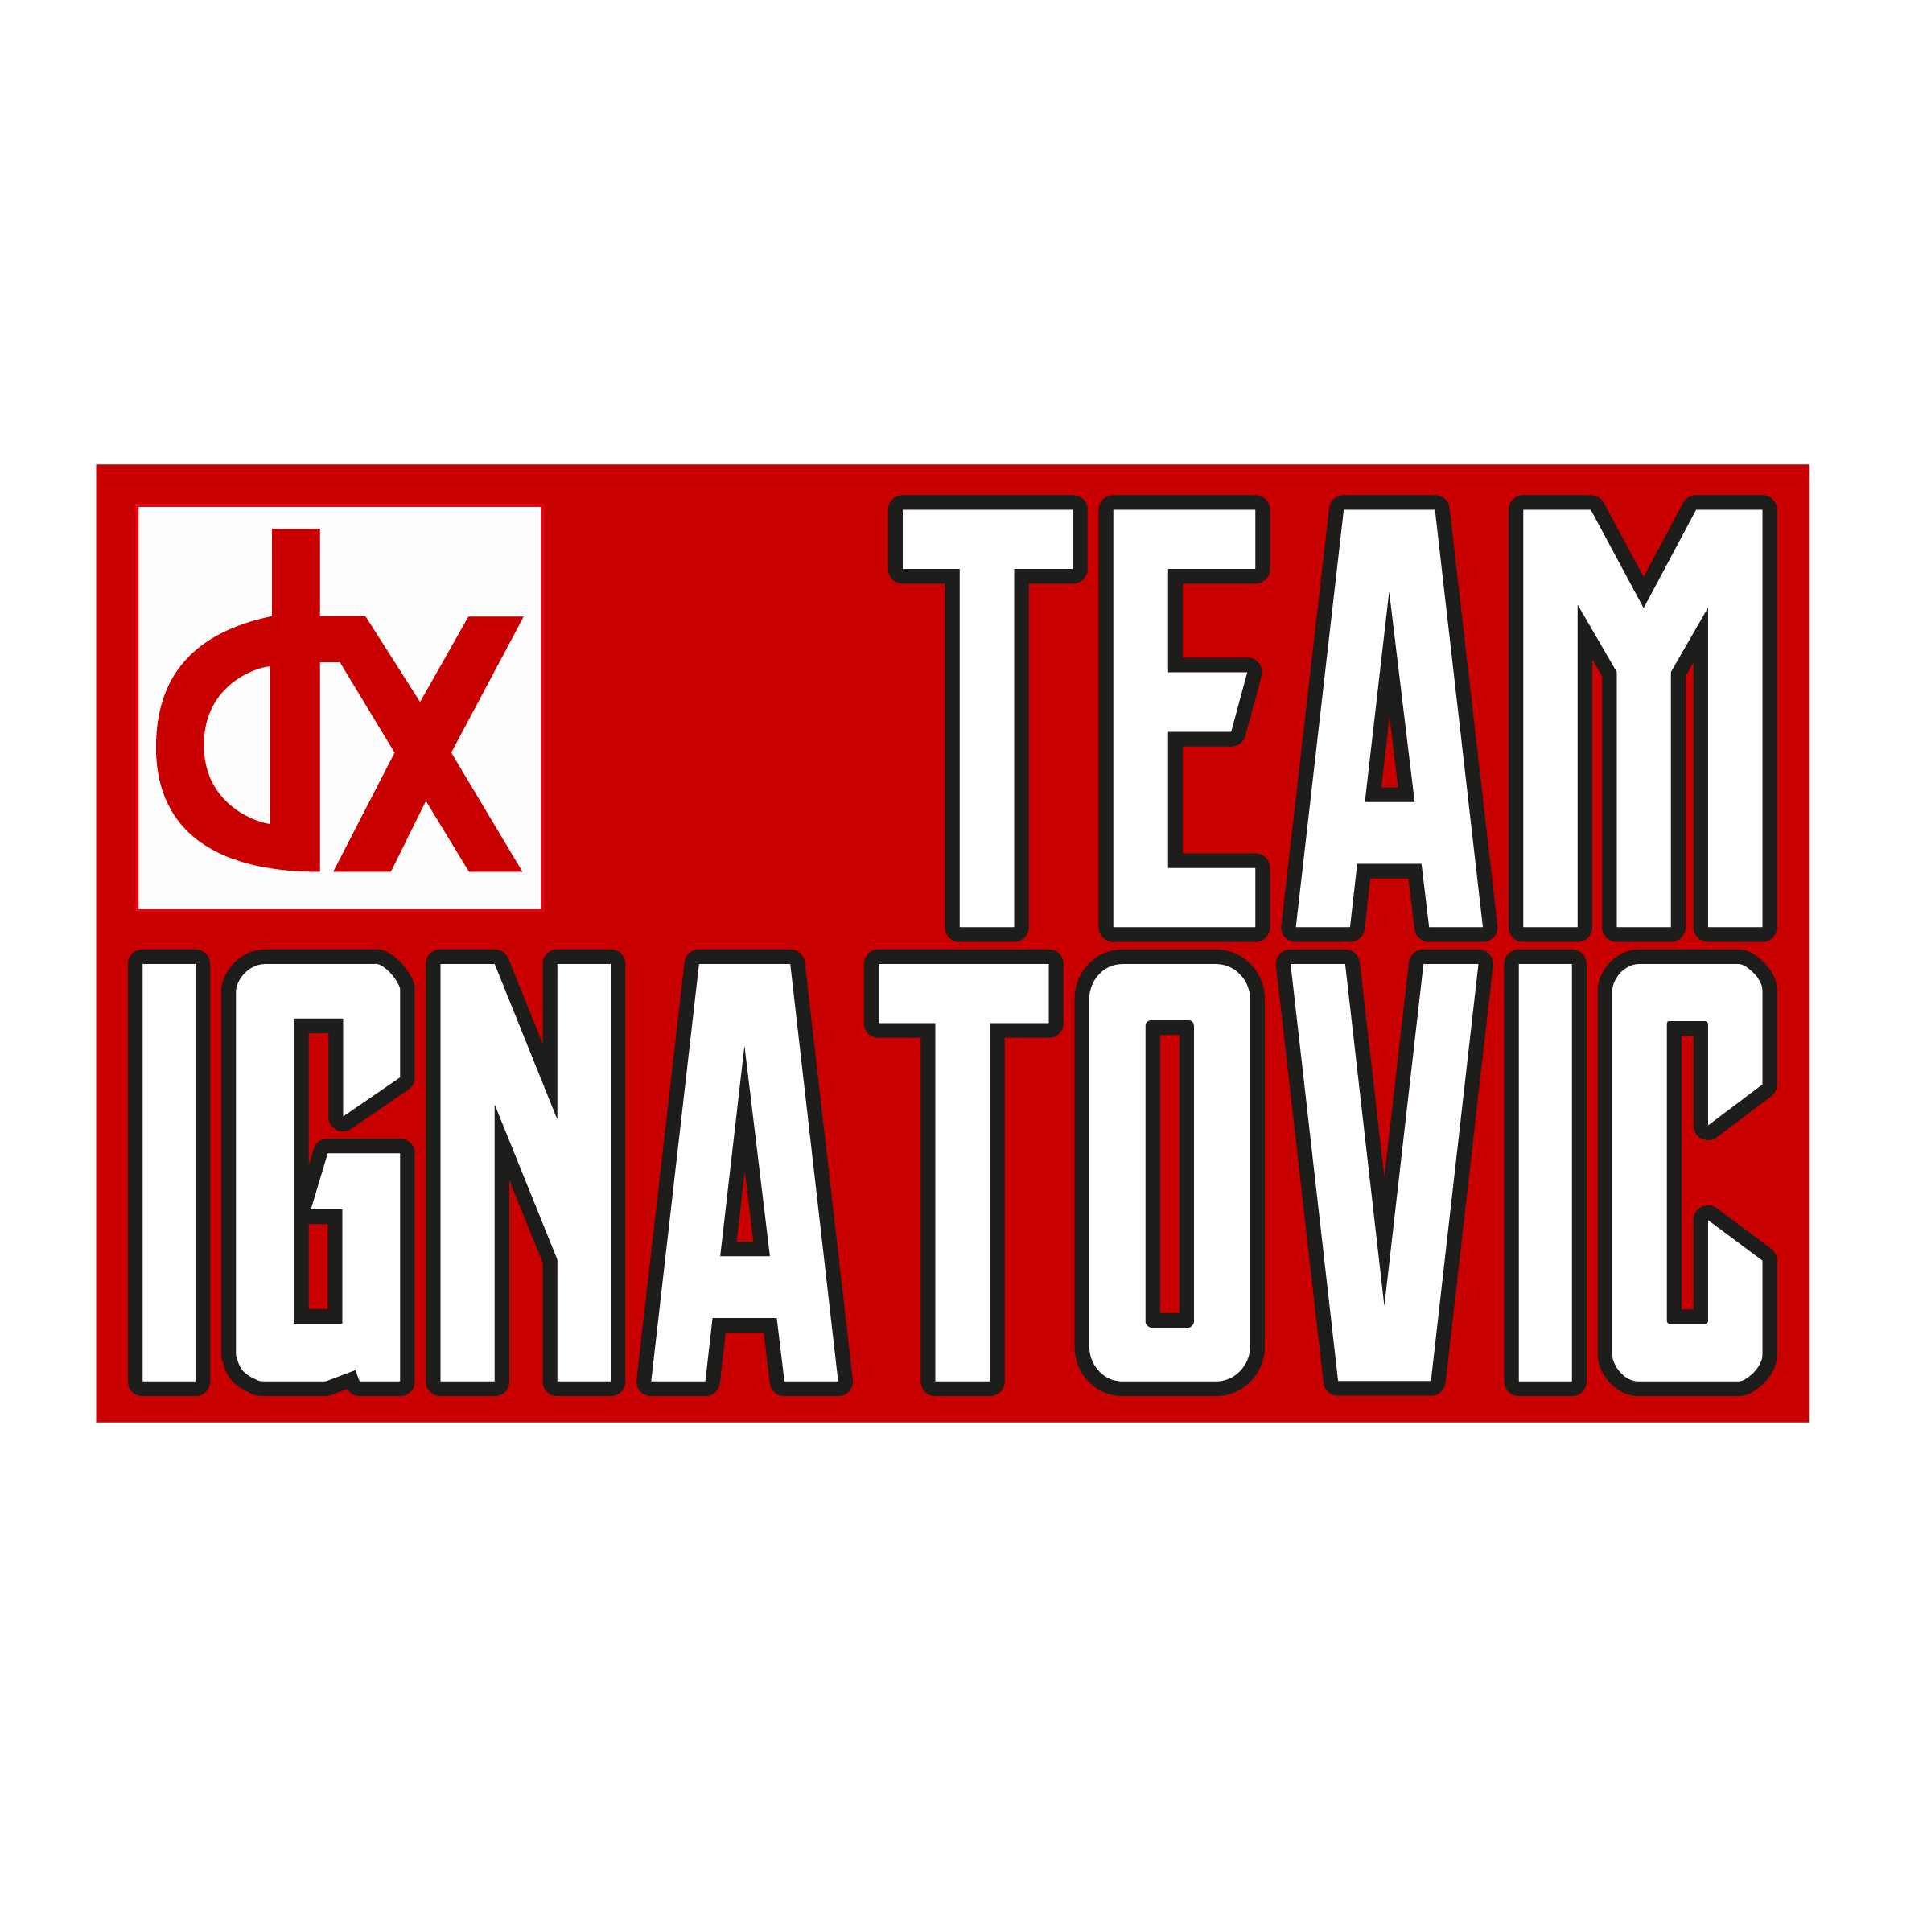 (c) Teamignatovic.com